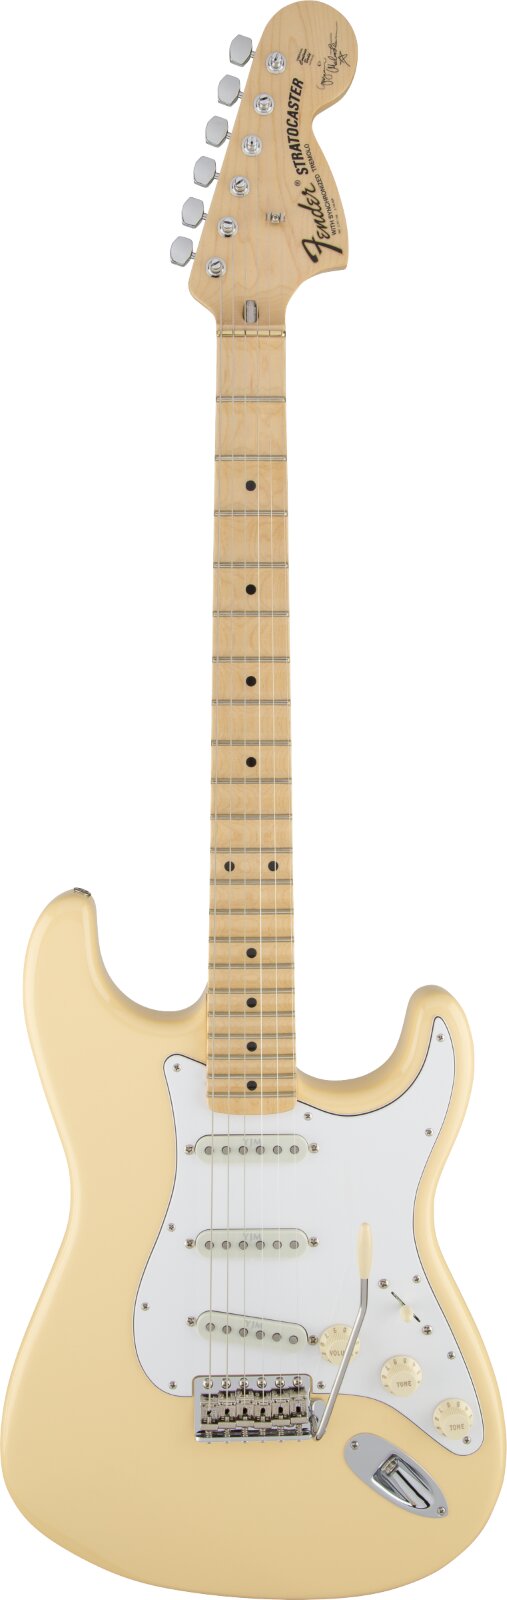 Fender Yngwie Malmsteen Stratocaster, Scalloped Maple Fingerboard, Vintage White : photo 1